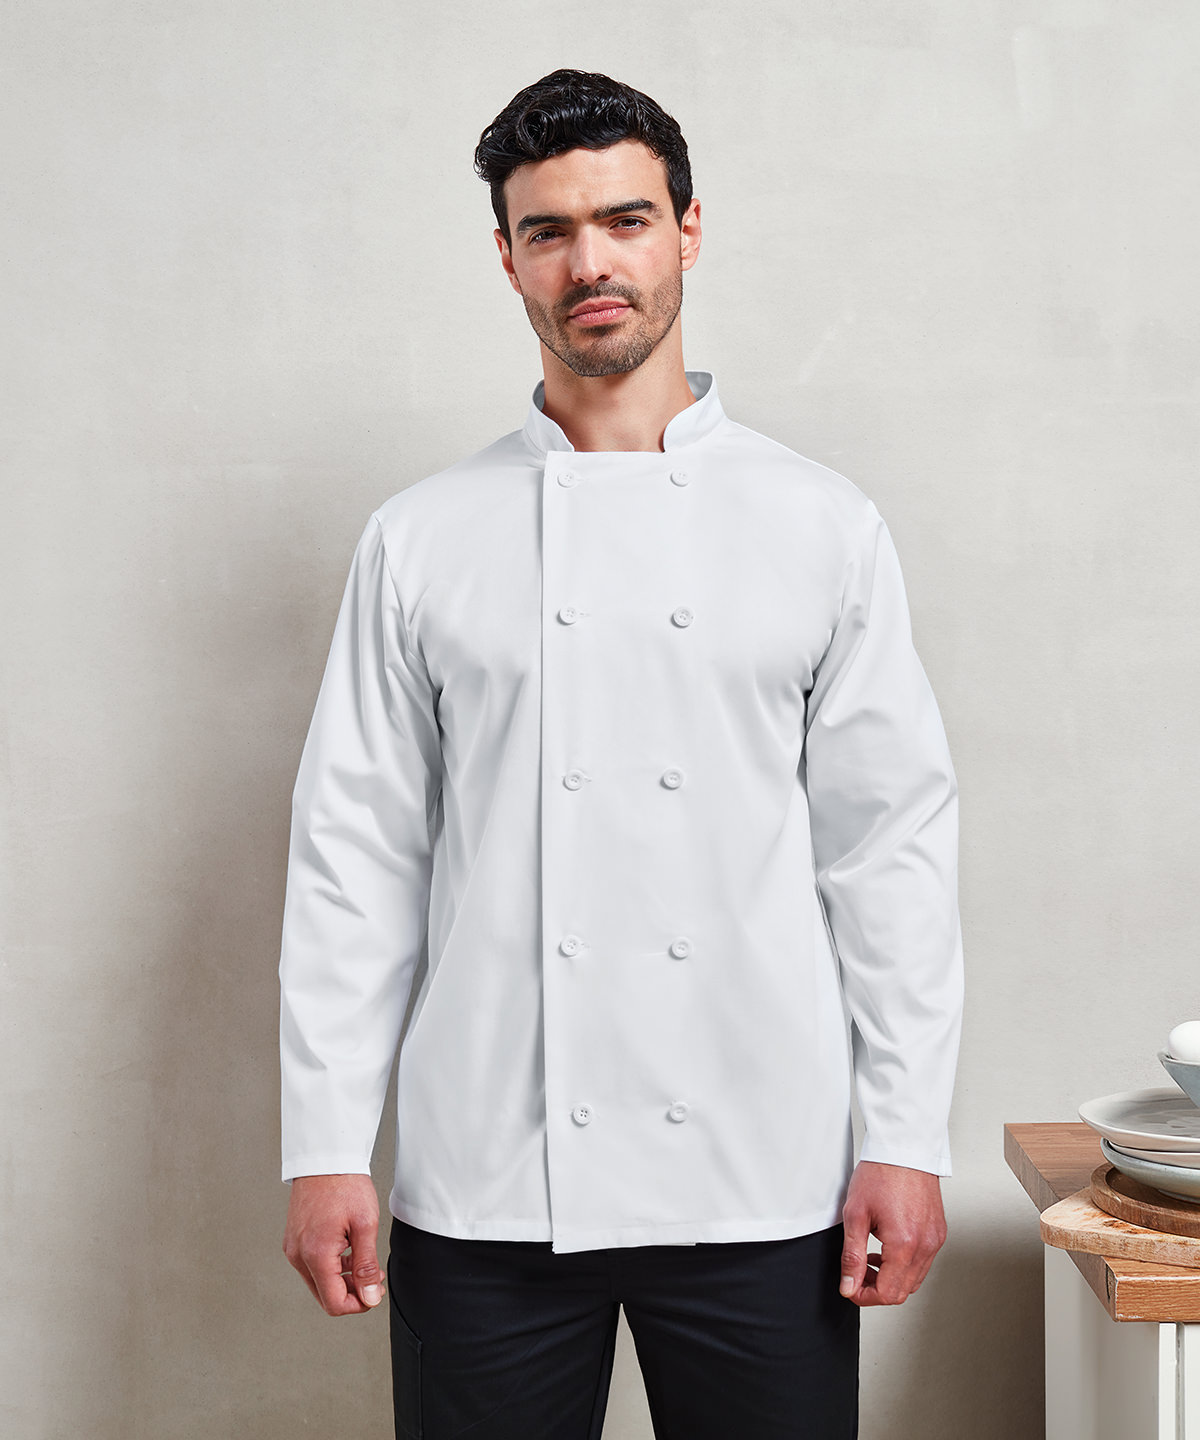 Long sleeve chefs jacket